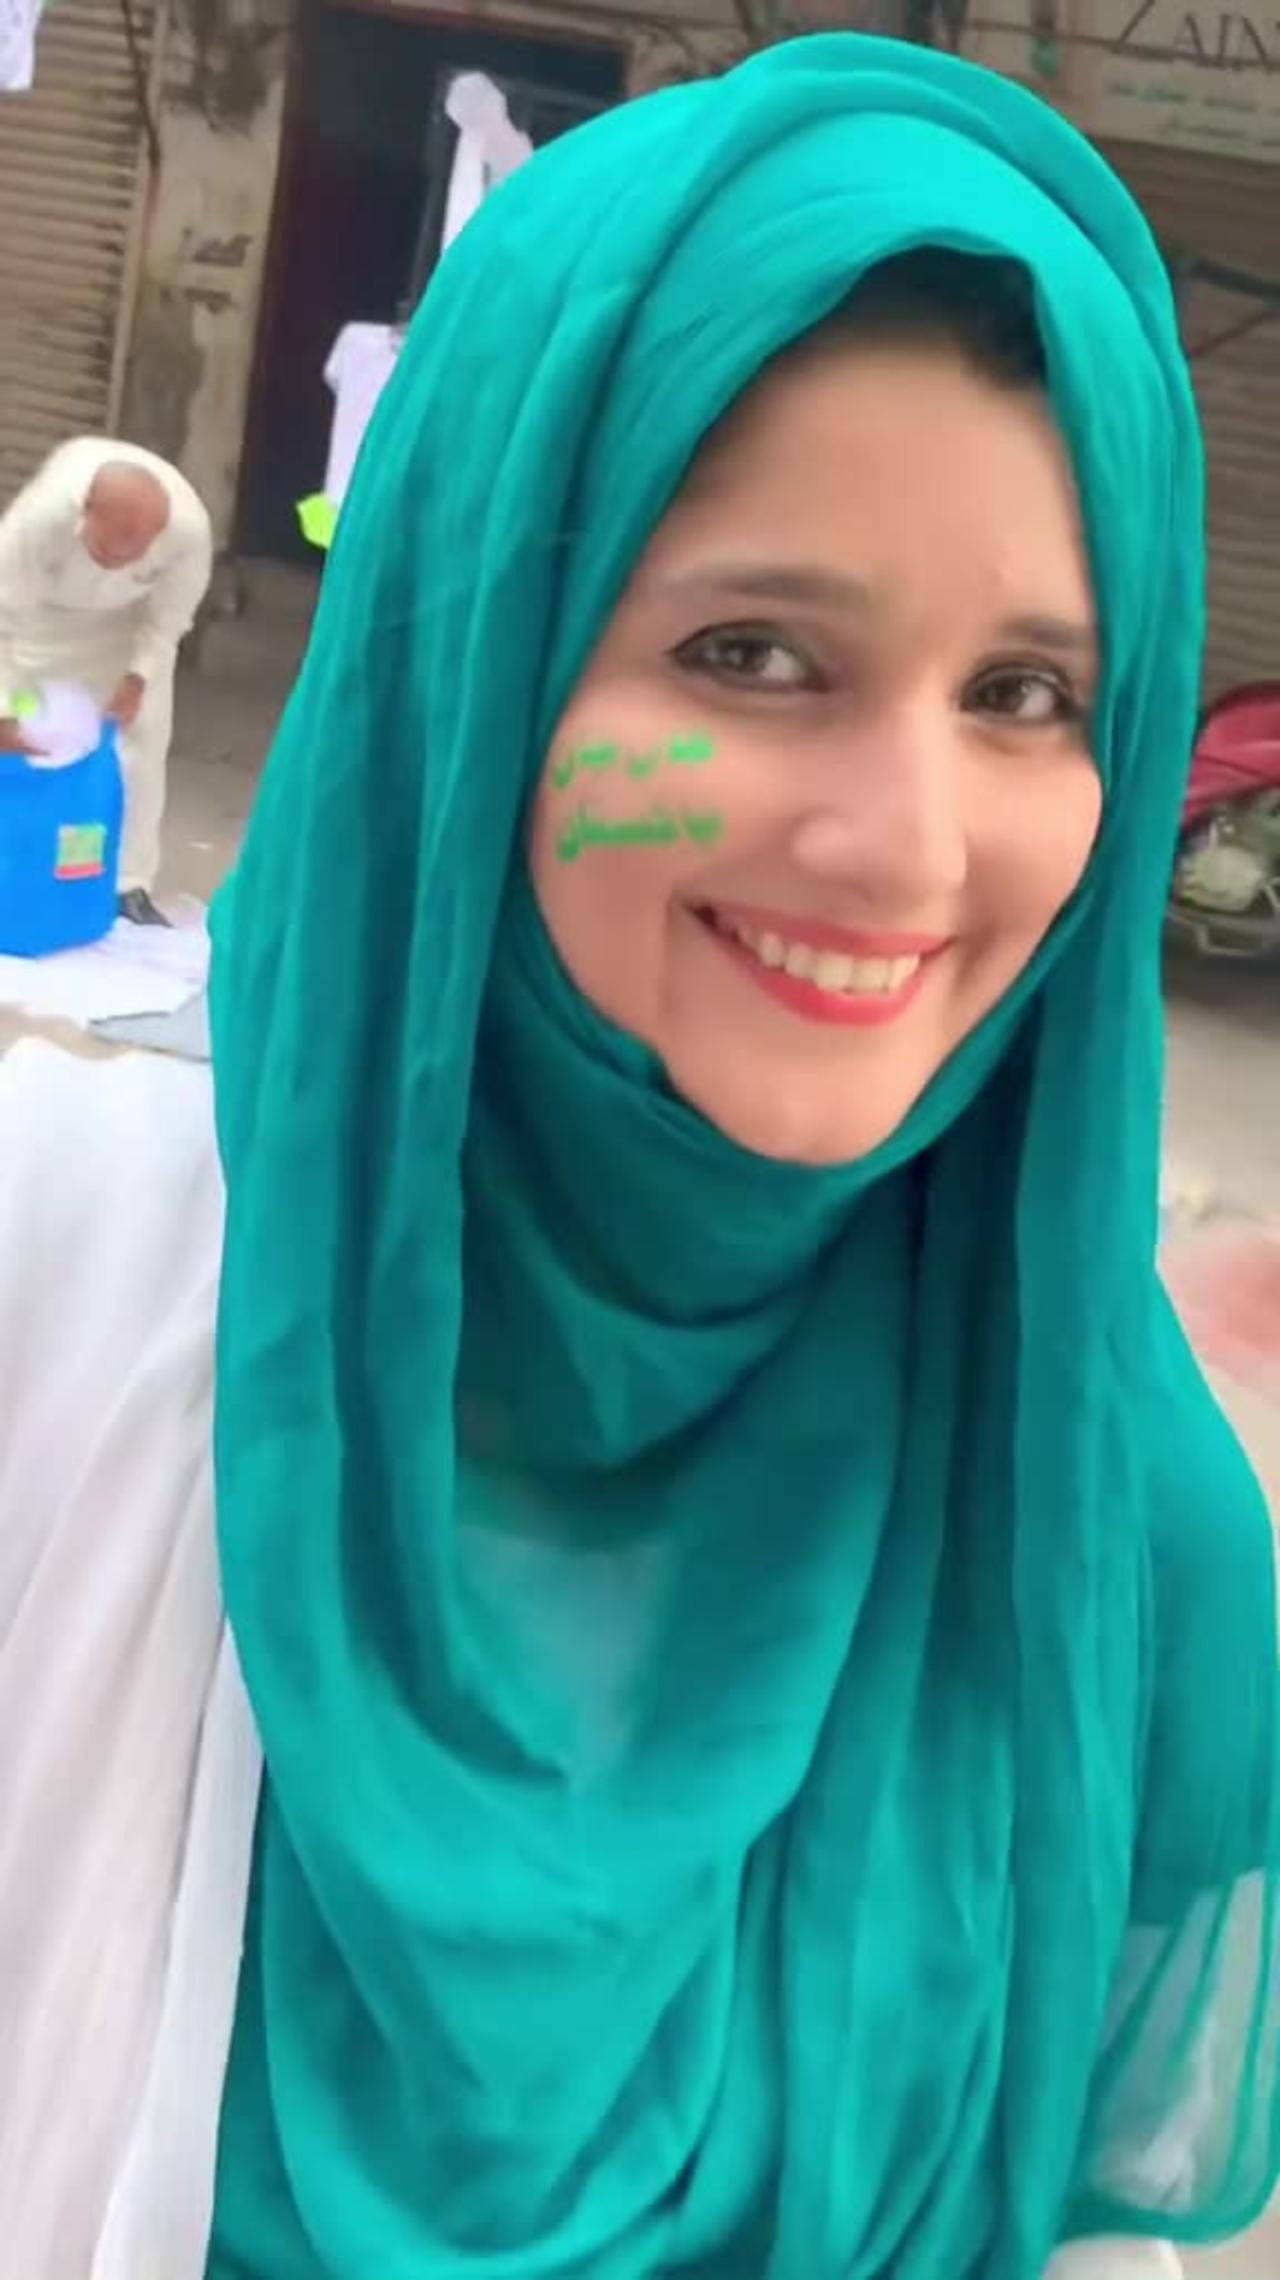 Cute girl saying Pakistan Zindabad